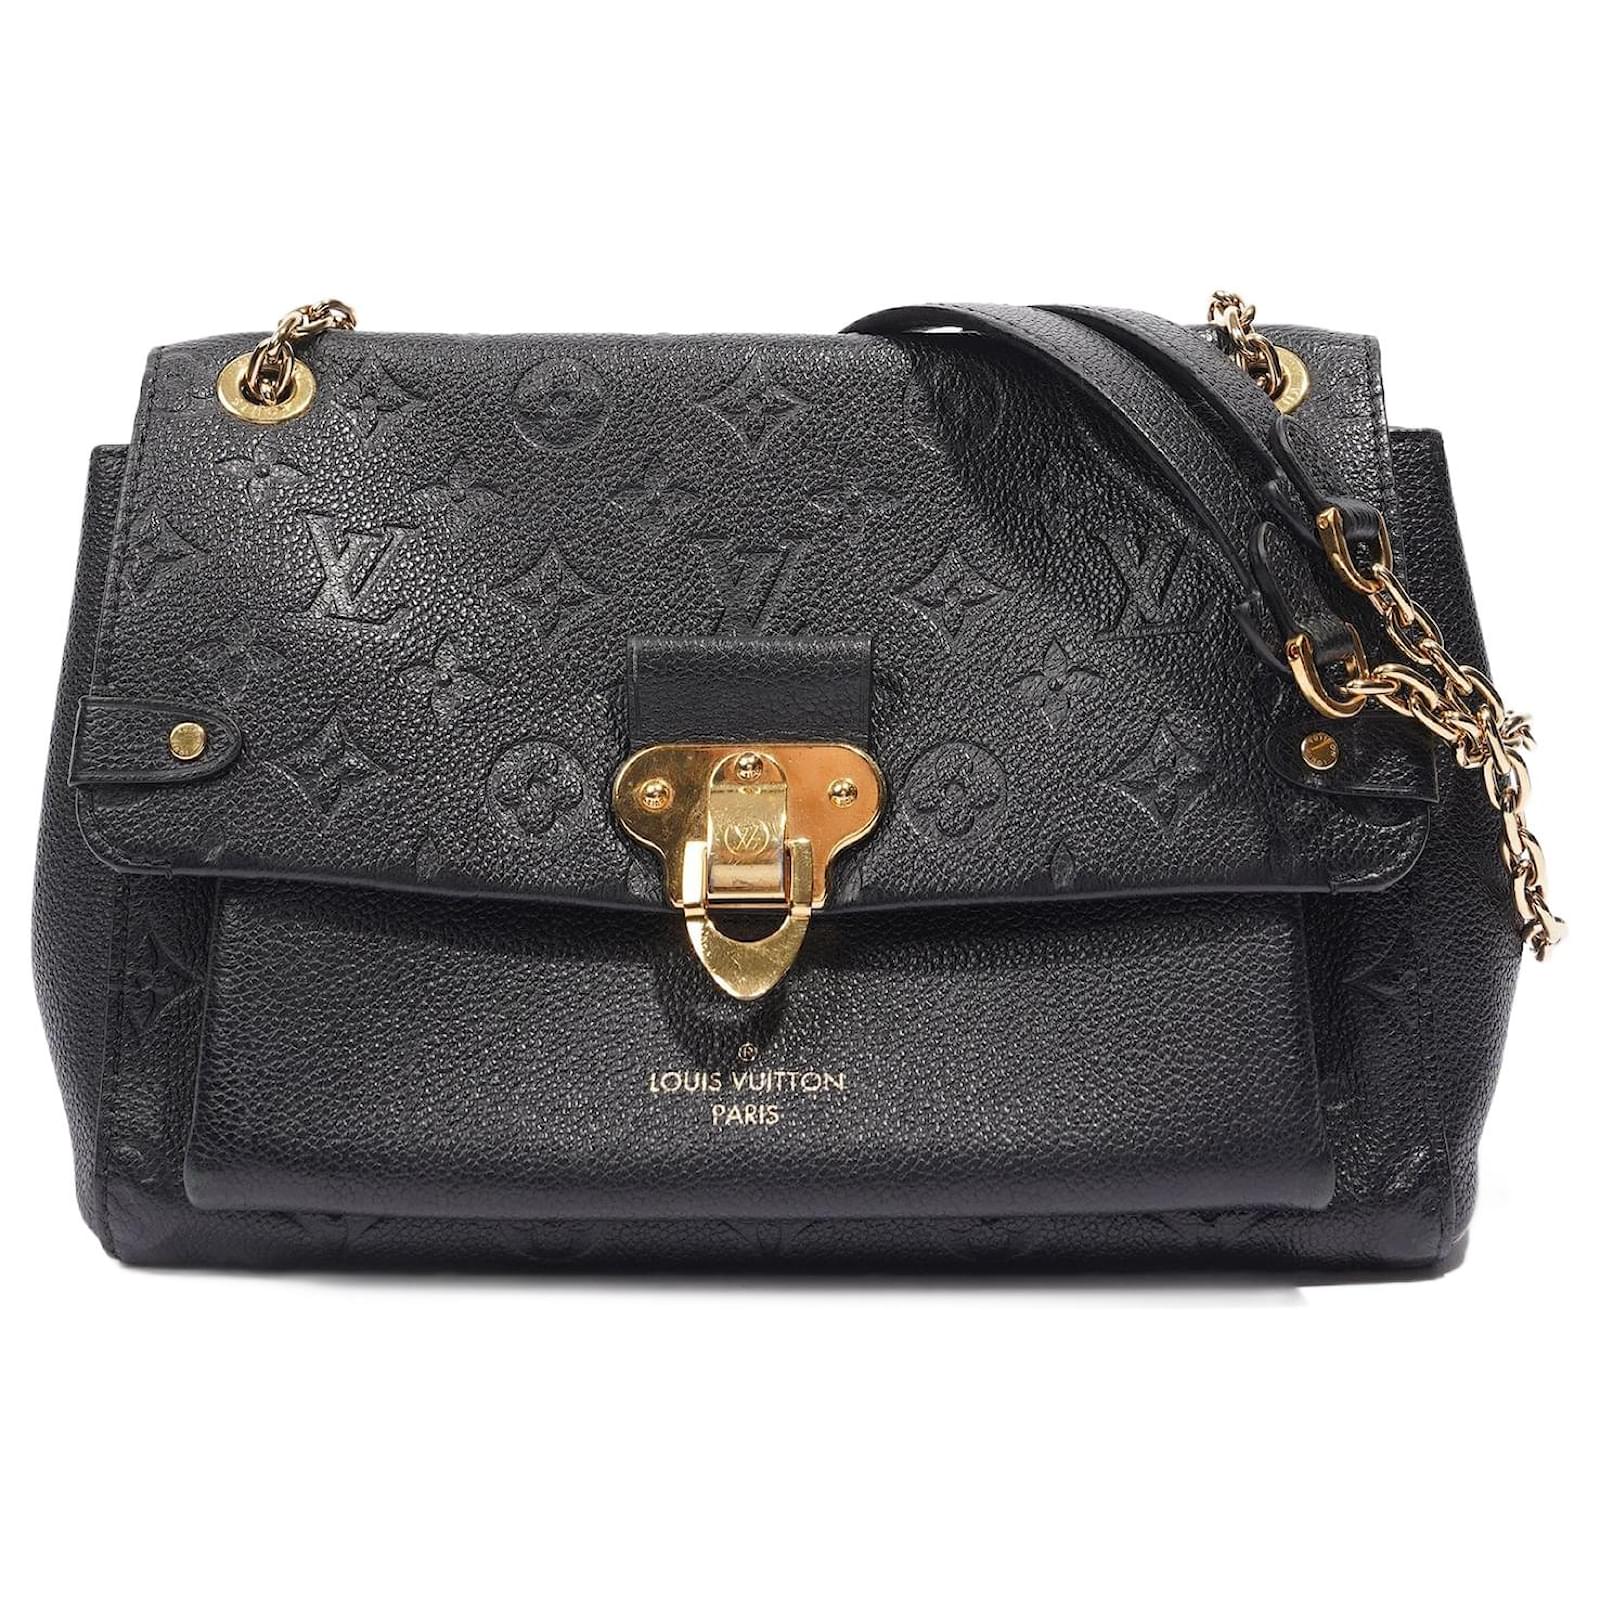 LOUIS VUITTON Handbags Louis Vuitton Patent Leather For Female for Women